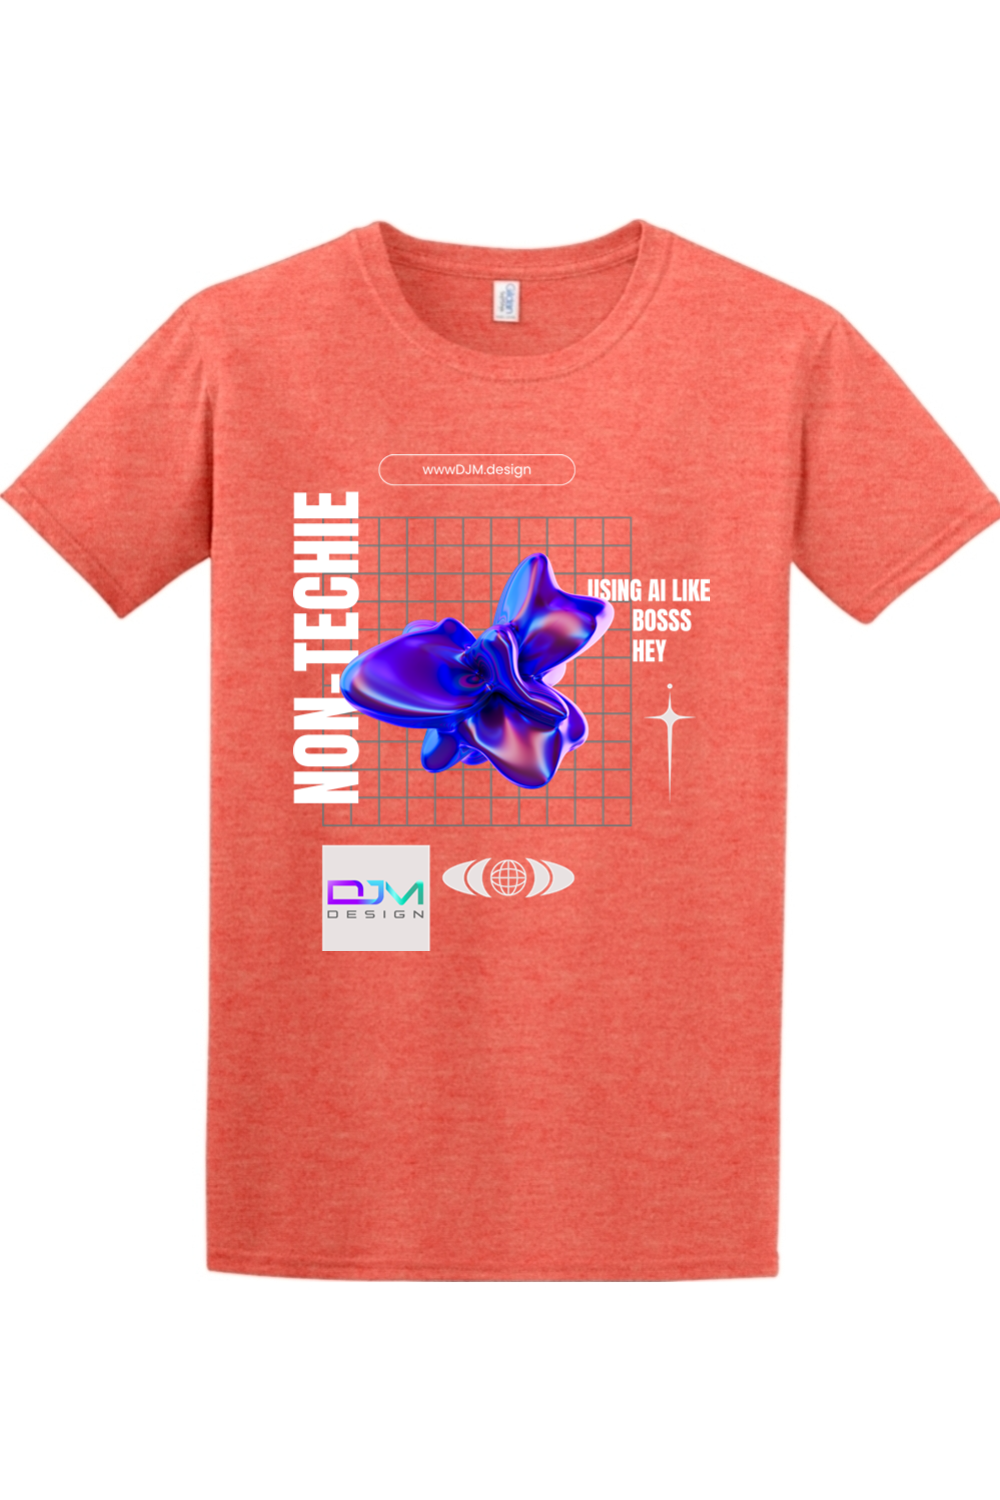 DJM.Design™ Softstyle T-Shirt Limited Edition (Ai Workshop 3K Leads Access) 690 Points